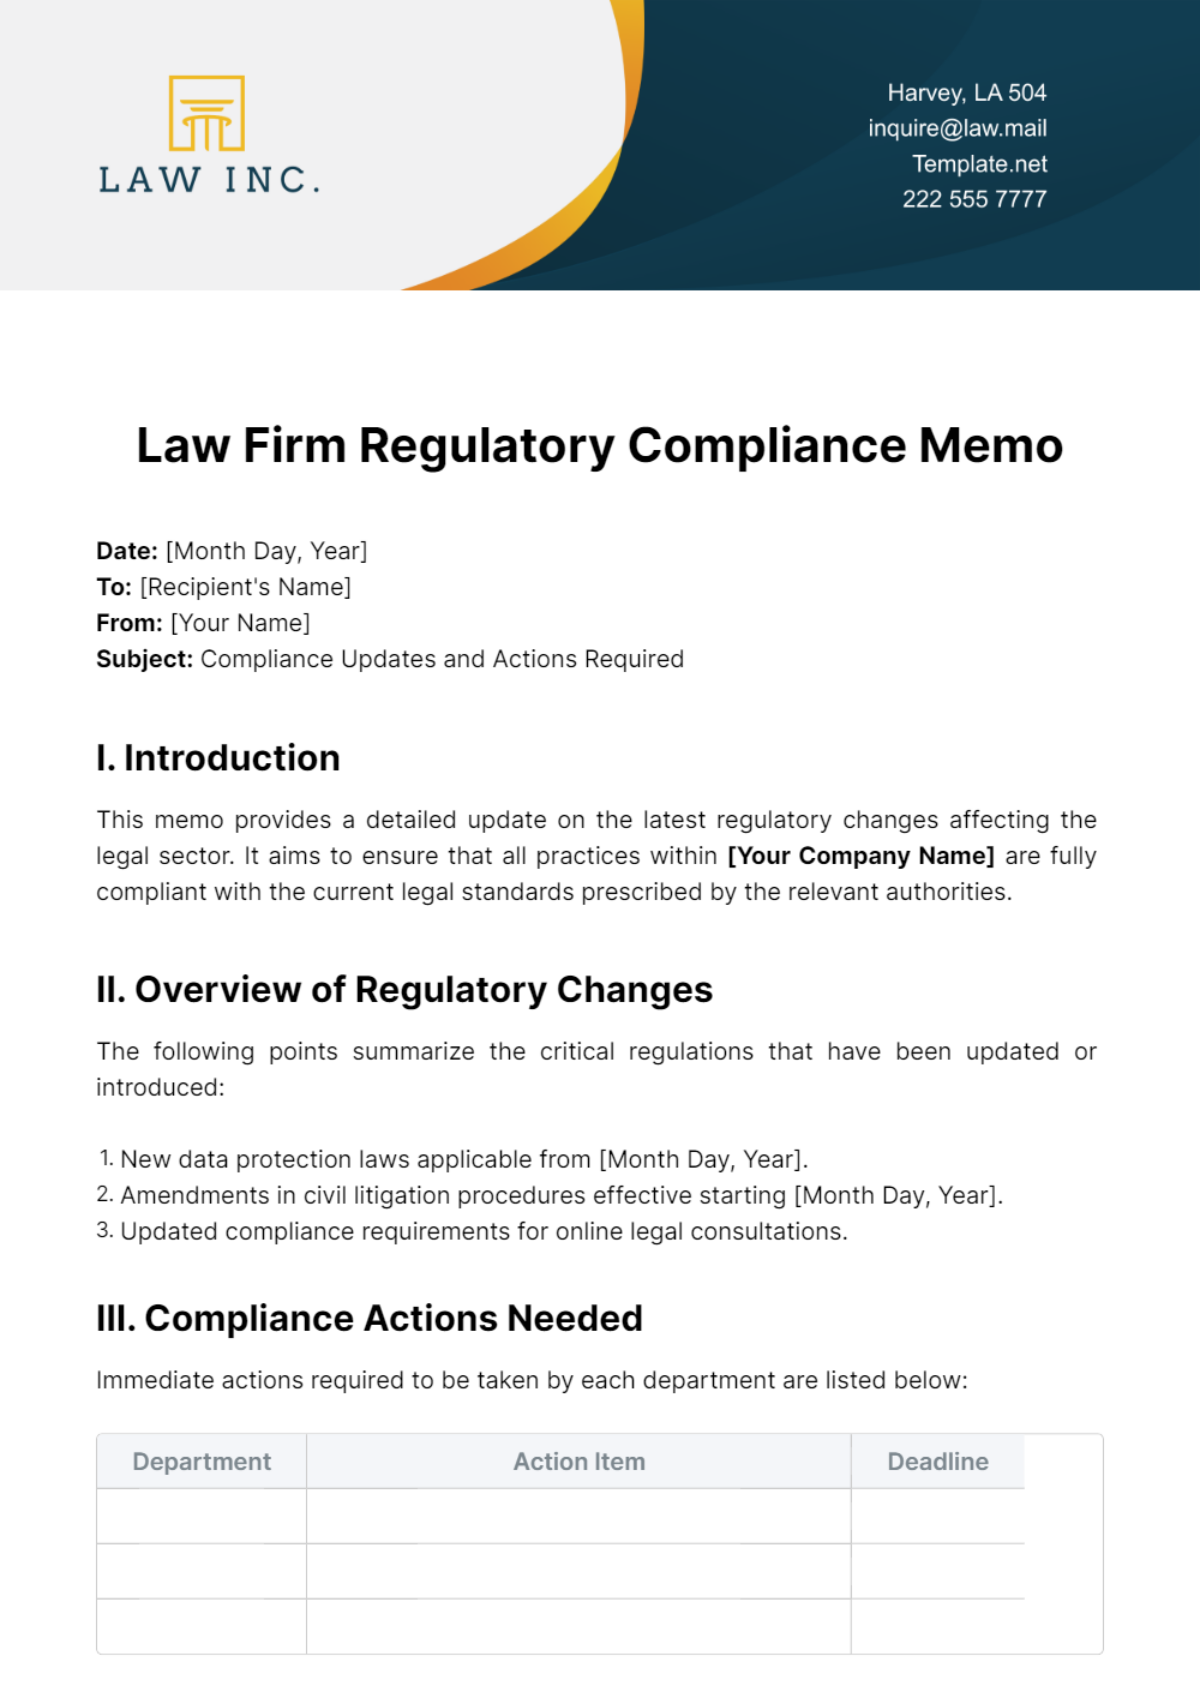 Law Firm Regulatory Compliance Memo Template